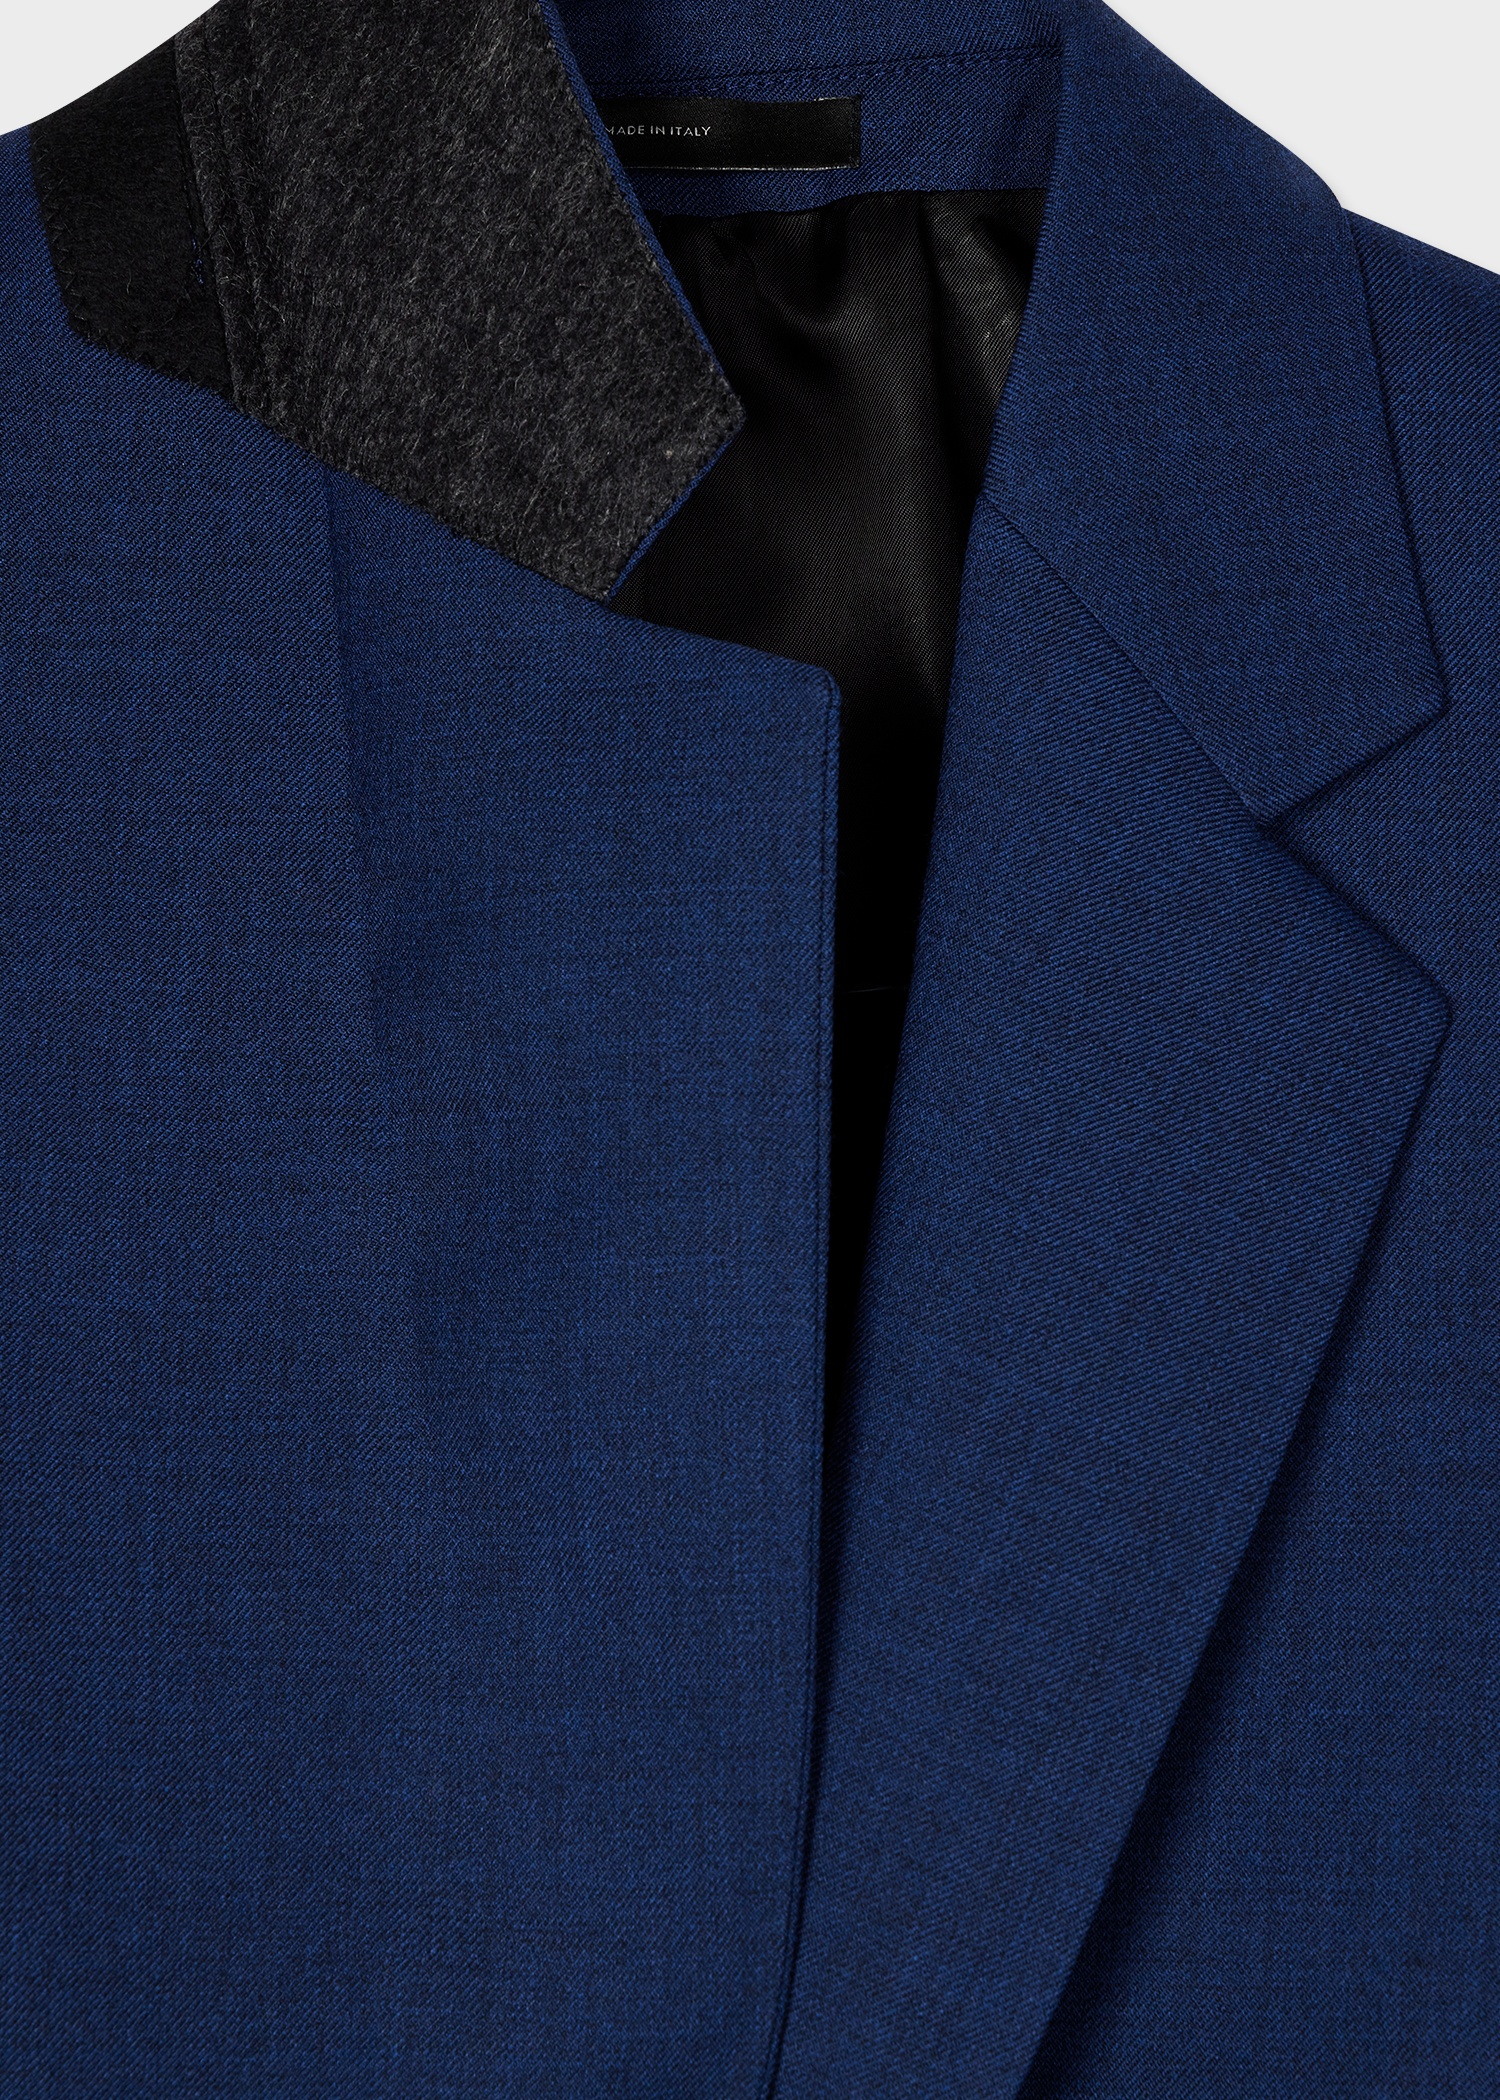 Women's A Suit To Travel In - Dark Blue Wool Two-Button Blazer - 4